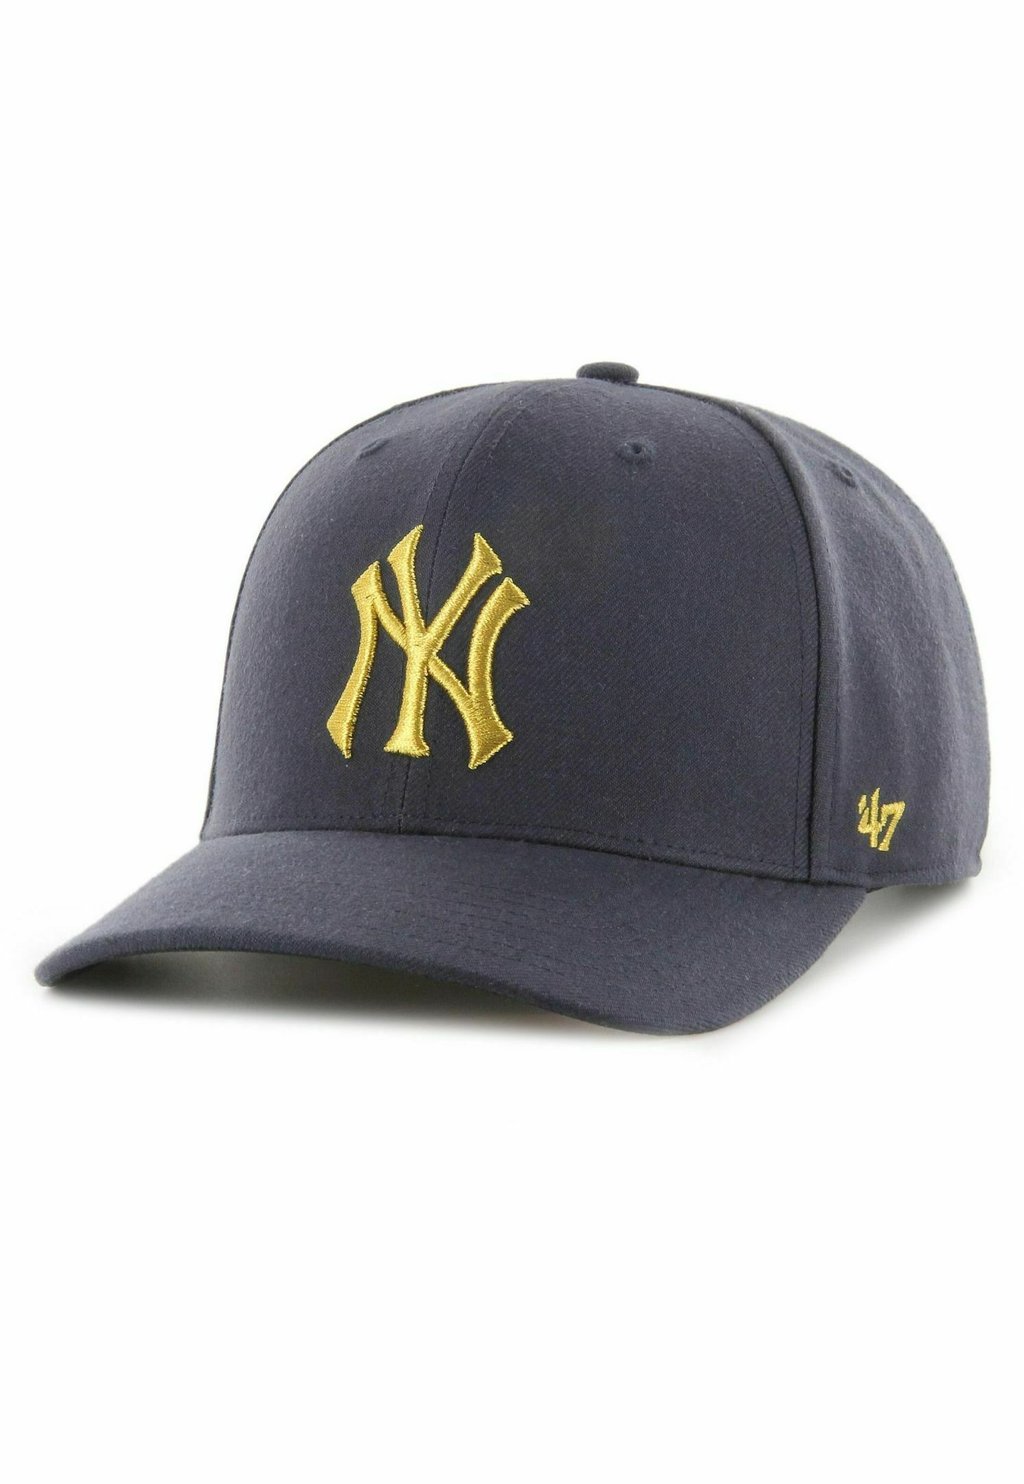 Бейсболка ZONE METALLIC NEW YORK YANKEES '47, цвет navy